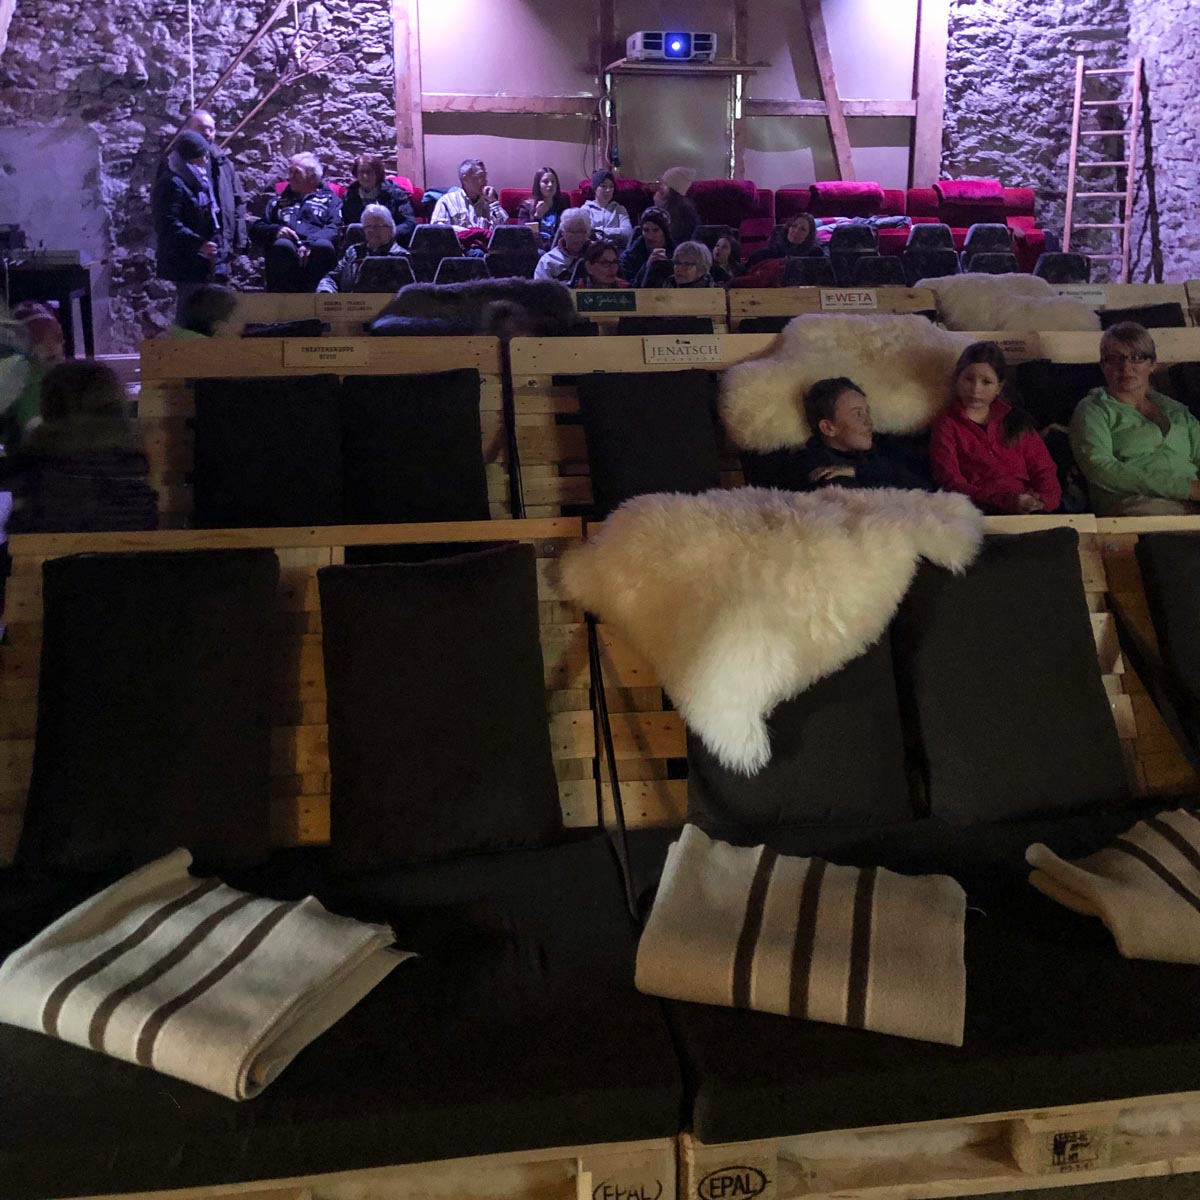 Winter-Familienerlebnisse in Savognin Bivio Albula